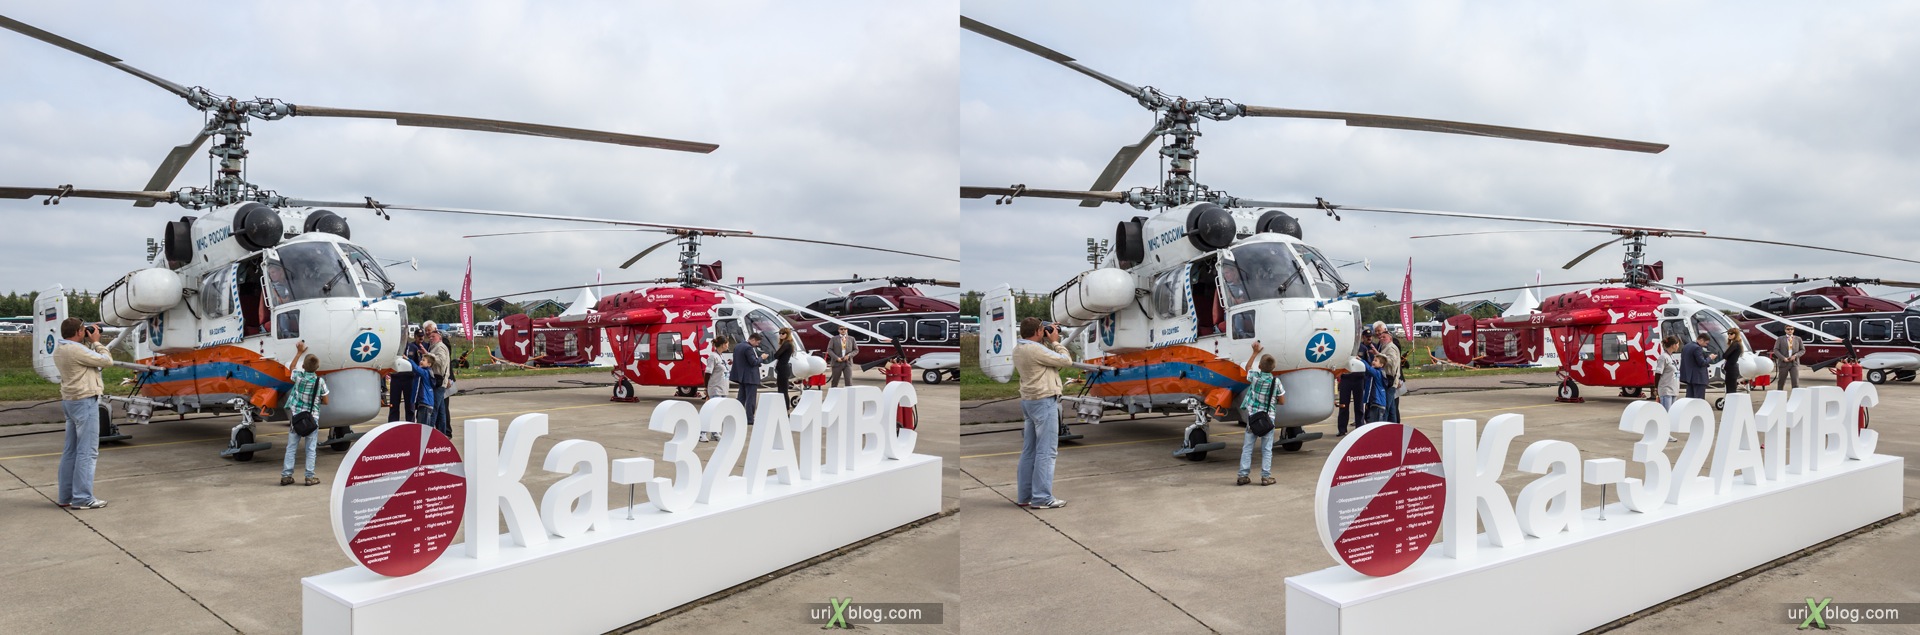 2013, MAKS, International Aviation and Space Salon, Russia, Ramenskoye airfield, Ka-32A11VS, Ka-226T, helicopter, 3D, stereo pair, cross-eyed, crossview, cross view stereo pair, stereoscopic